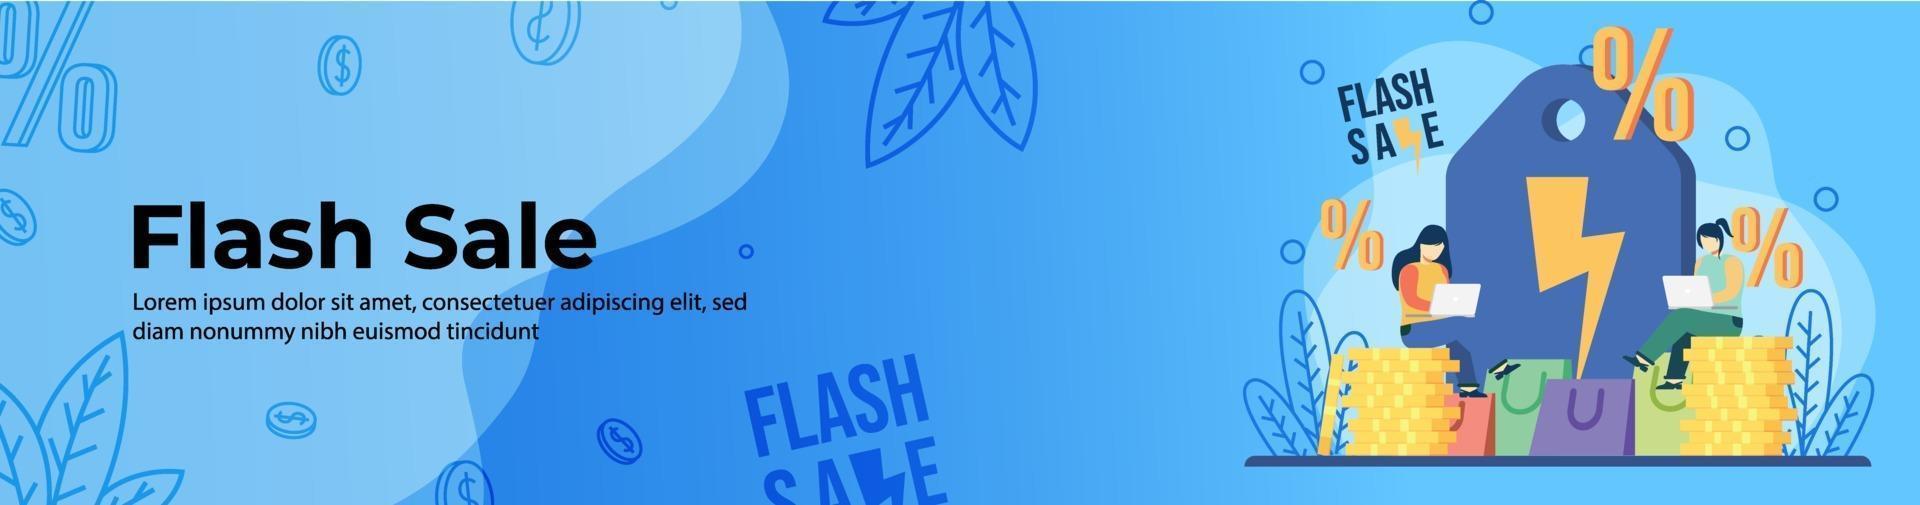 Flash Sale Web Banner Design vector